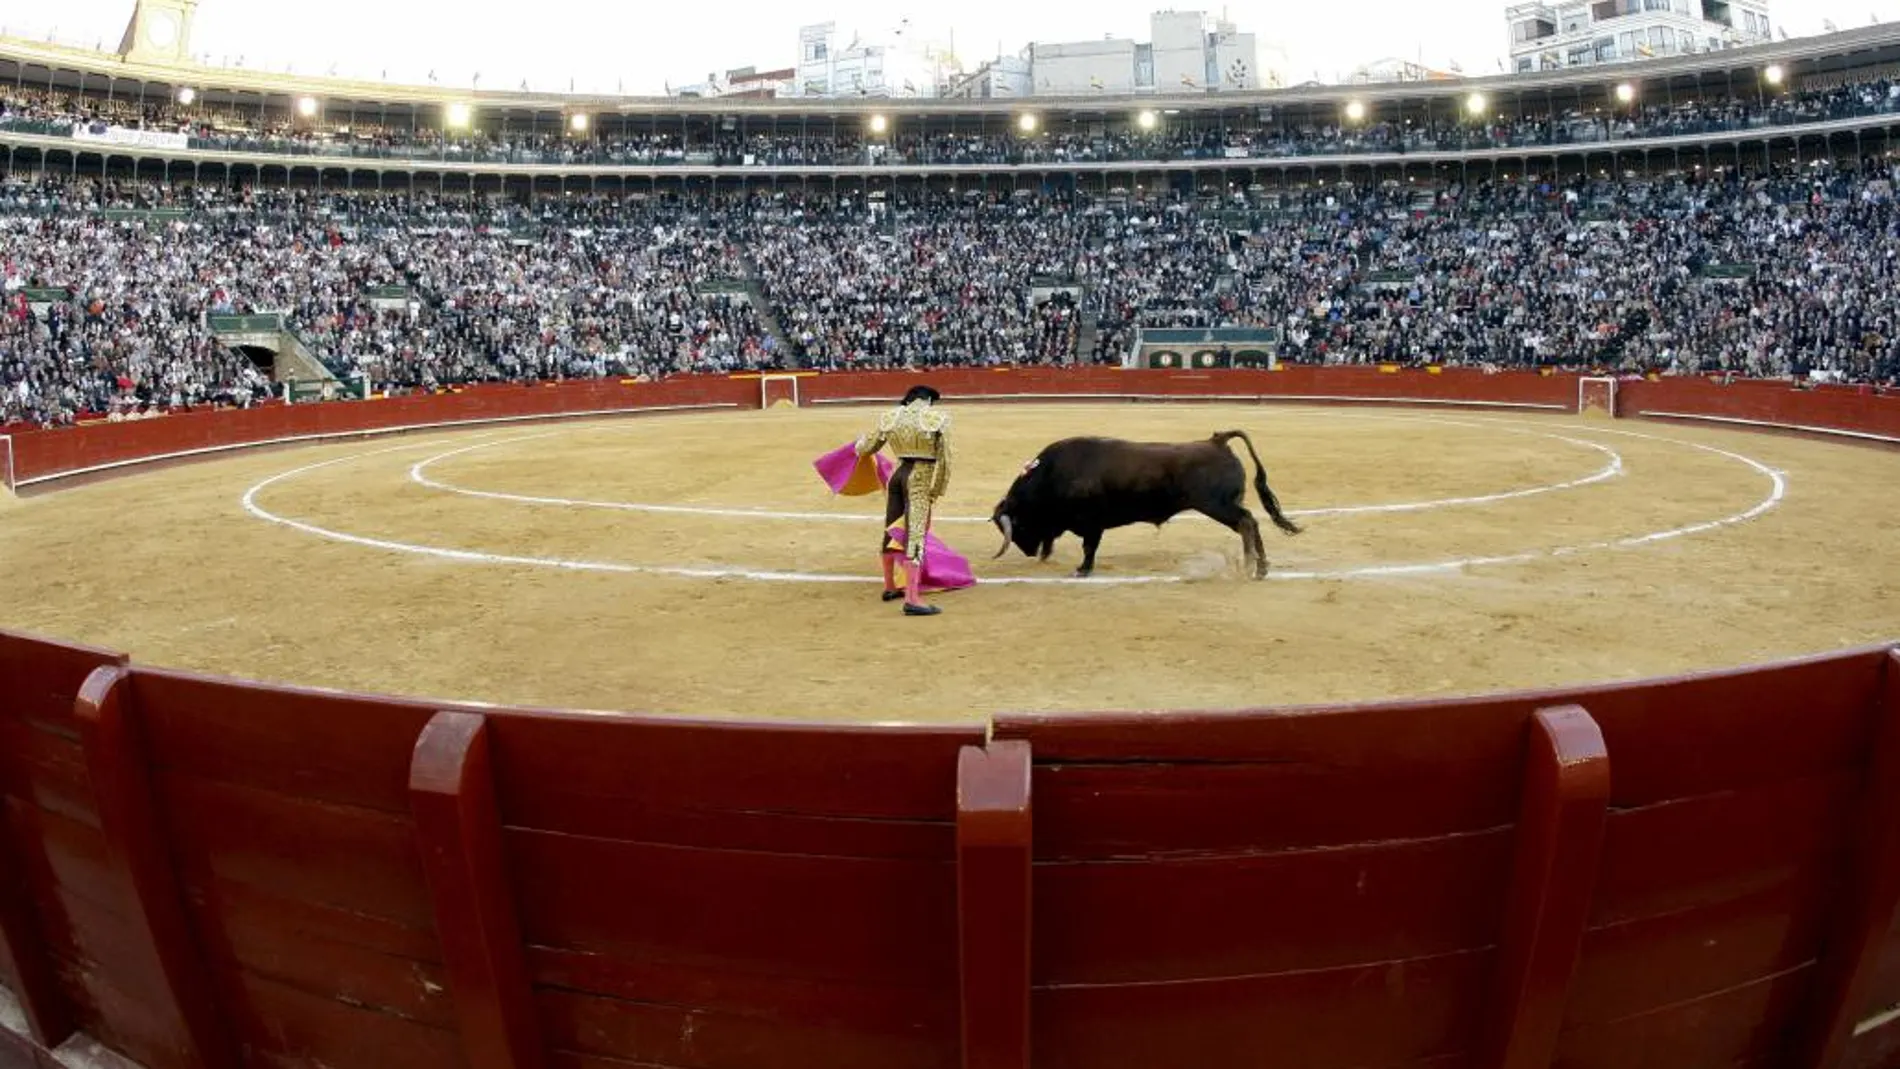 Imagen de laplaza de toros de Valencia